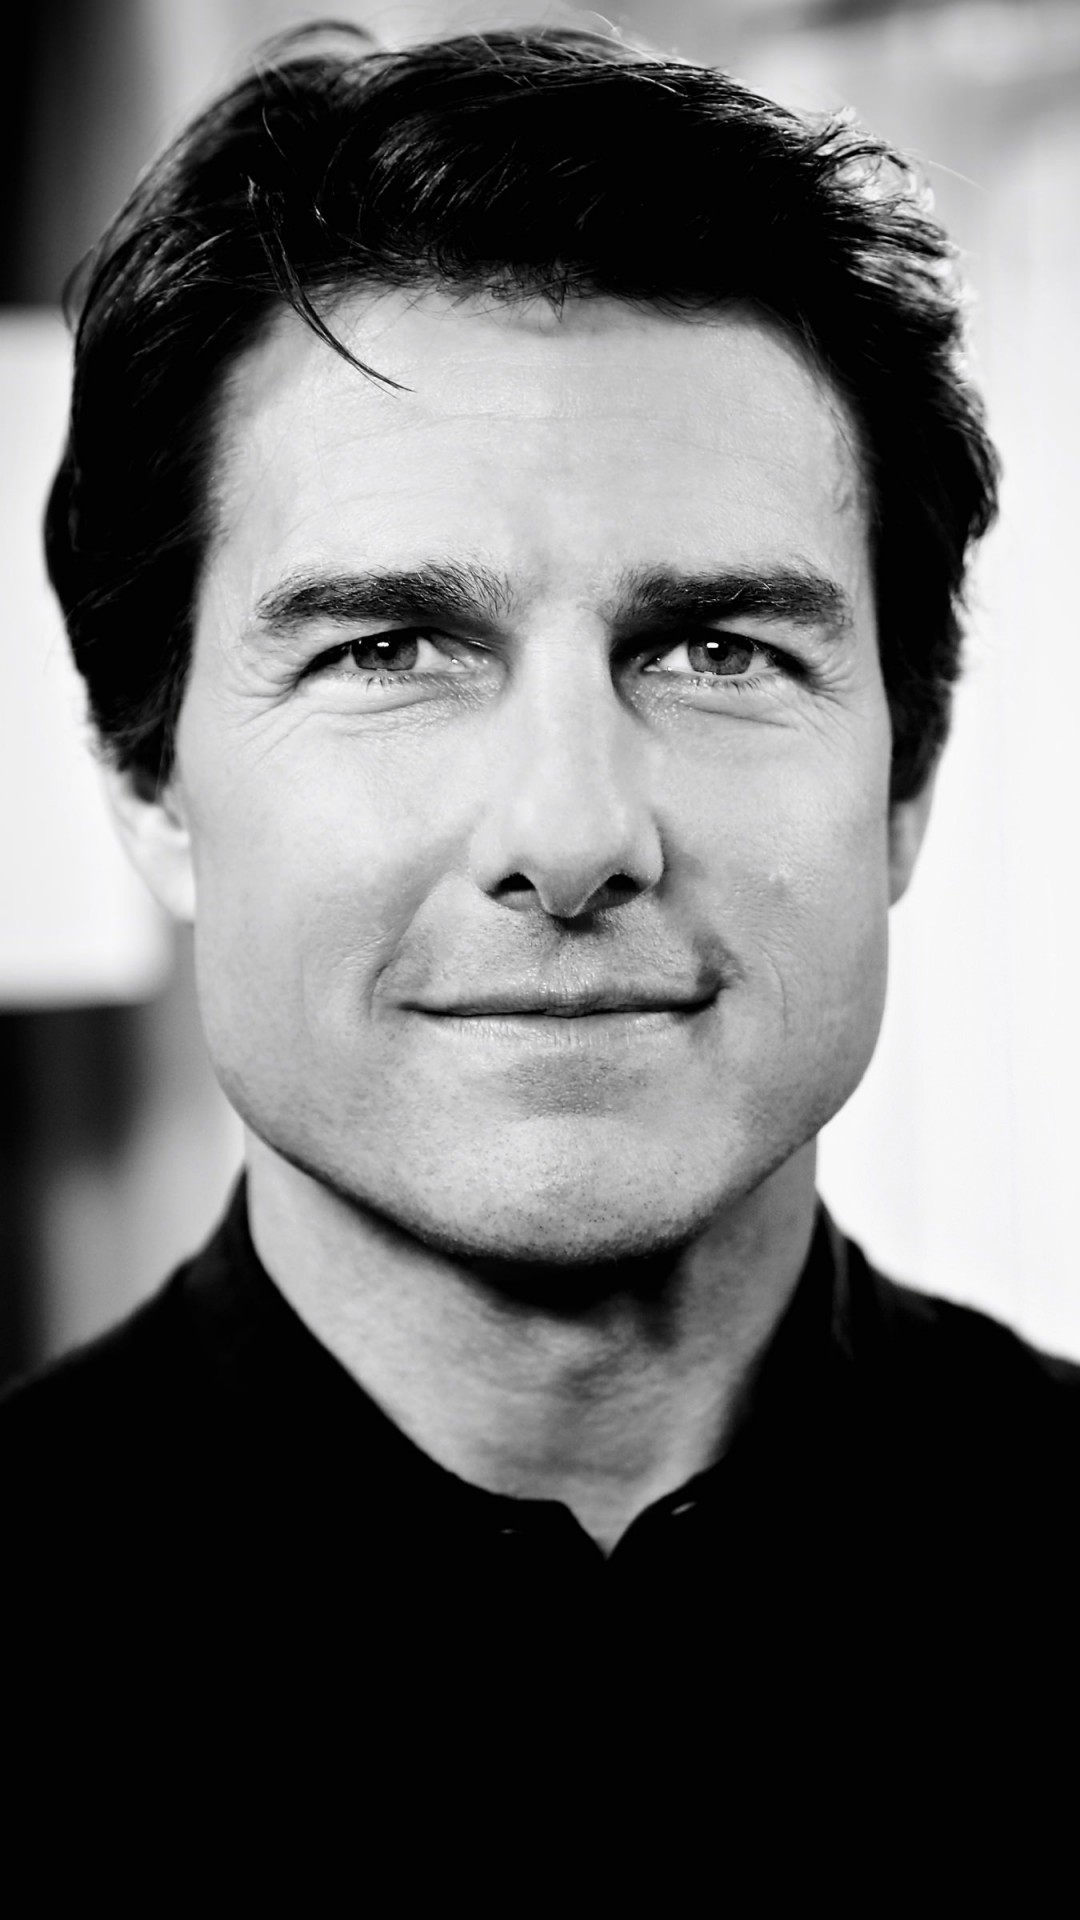 Tom Cruise Black & White Portrait Wallpaper for Google Nexus 5X